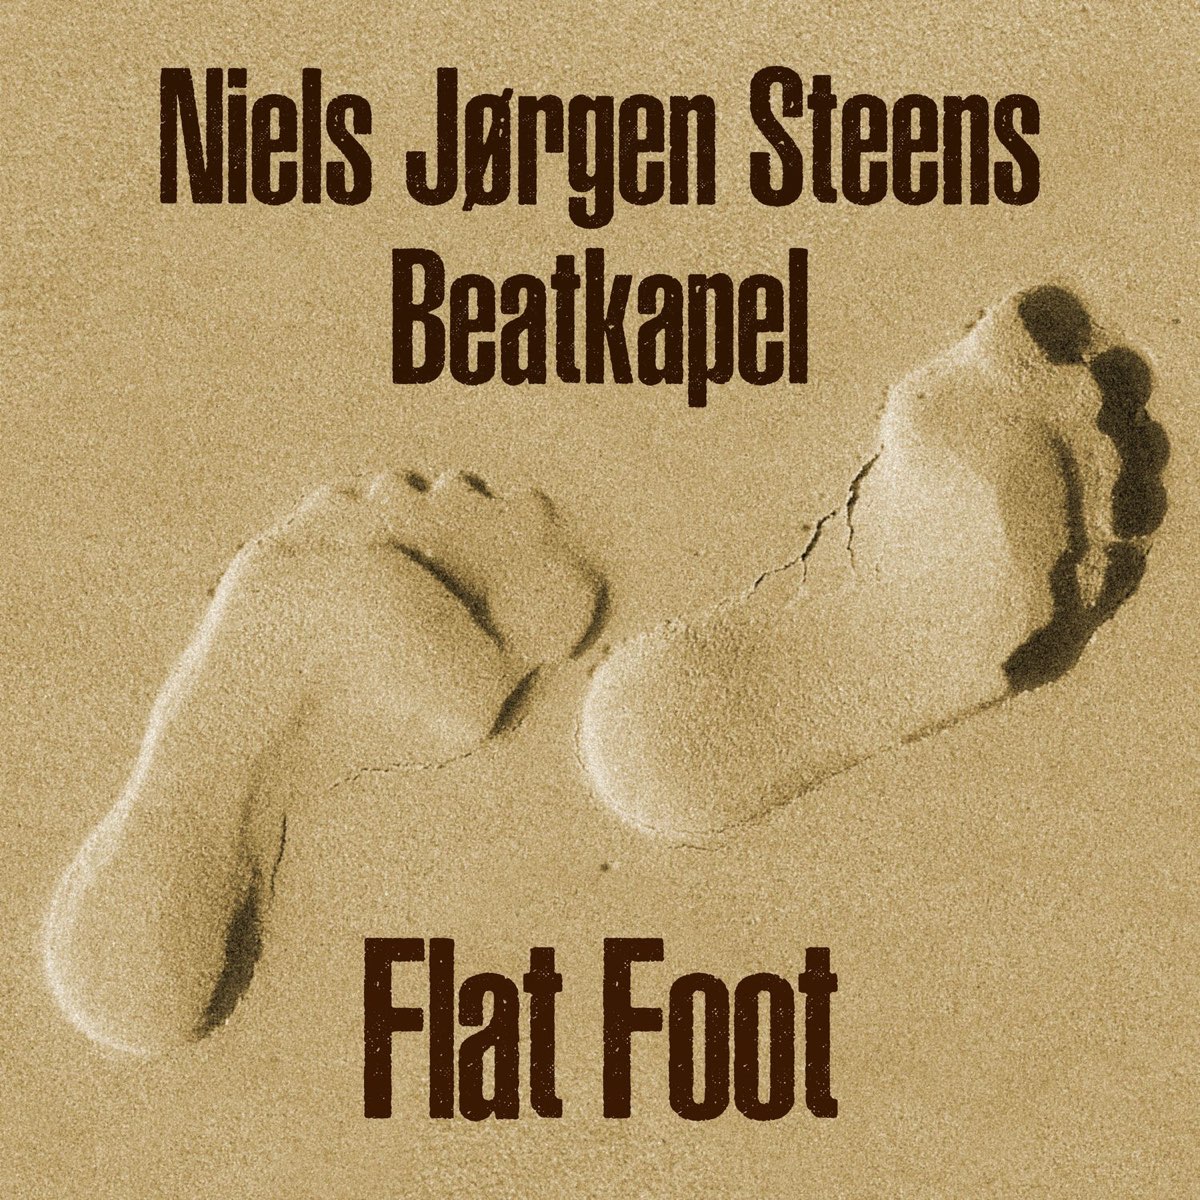 Feet feat. Flat foot Floogie. Foot feat. Hey Lock.